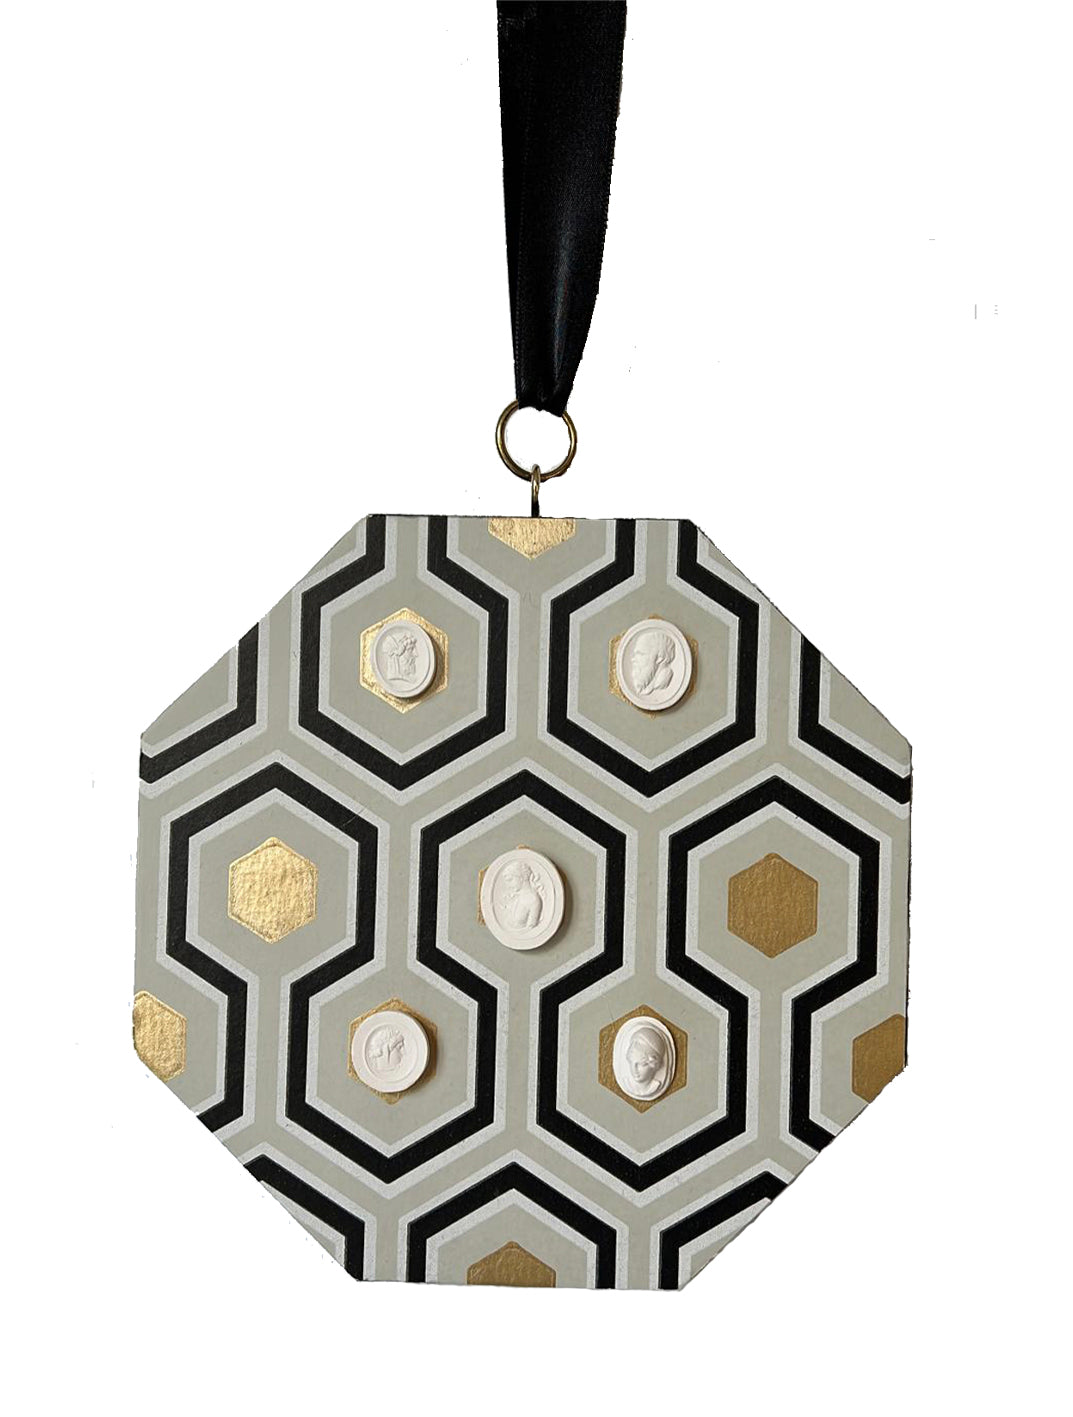 Hexagonal Intaglio plate - David Hicks